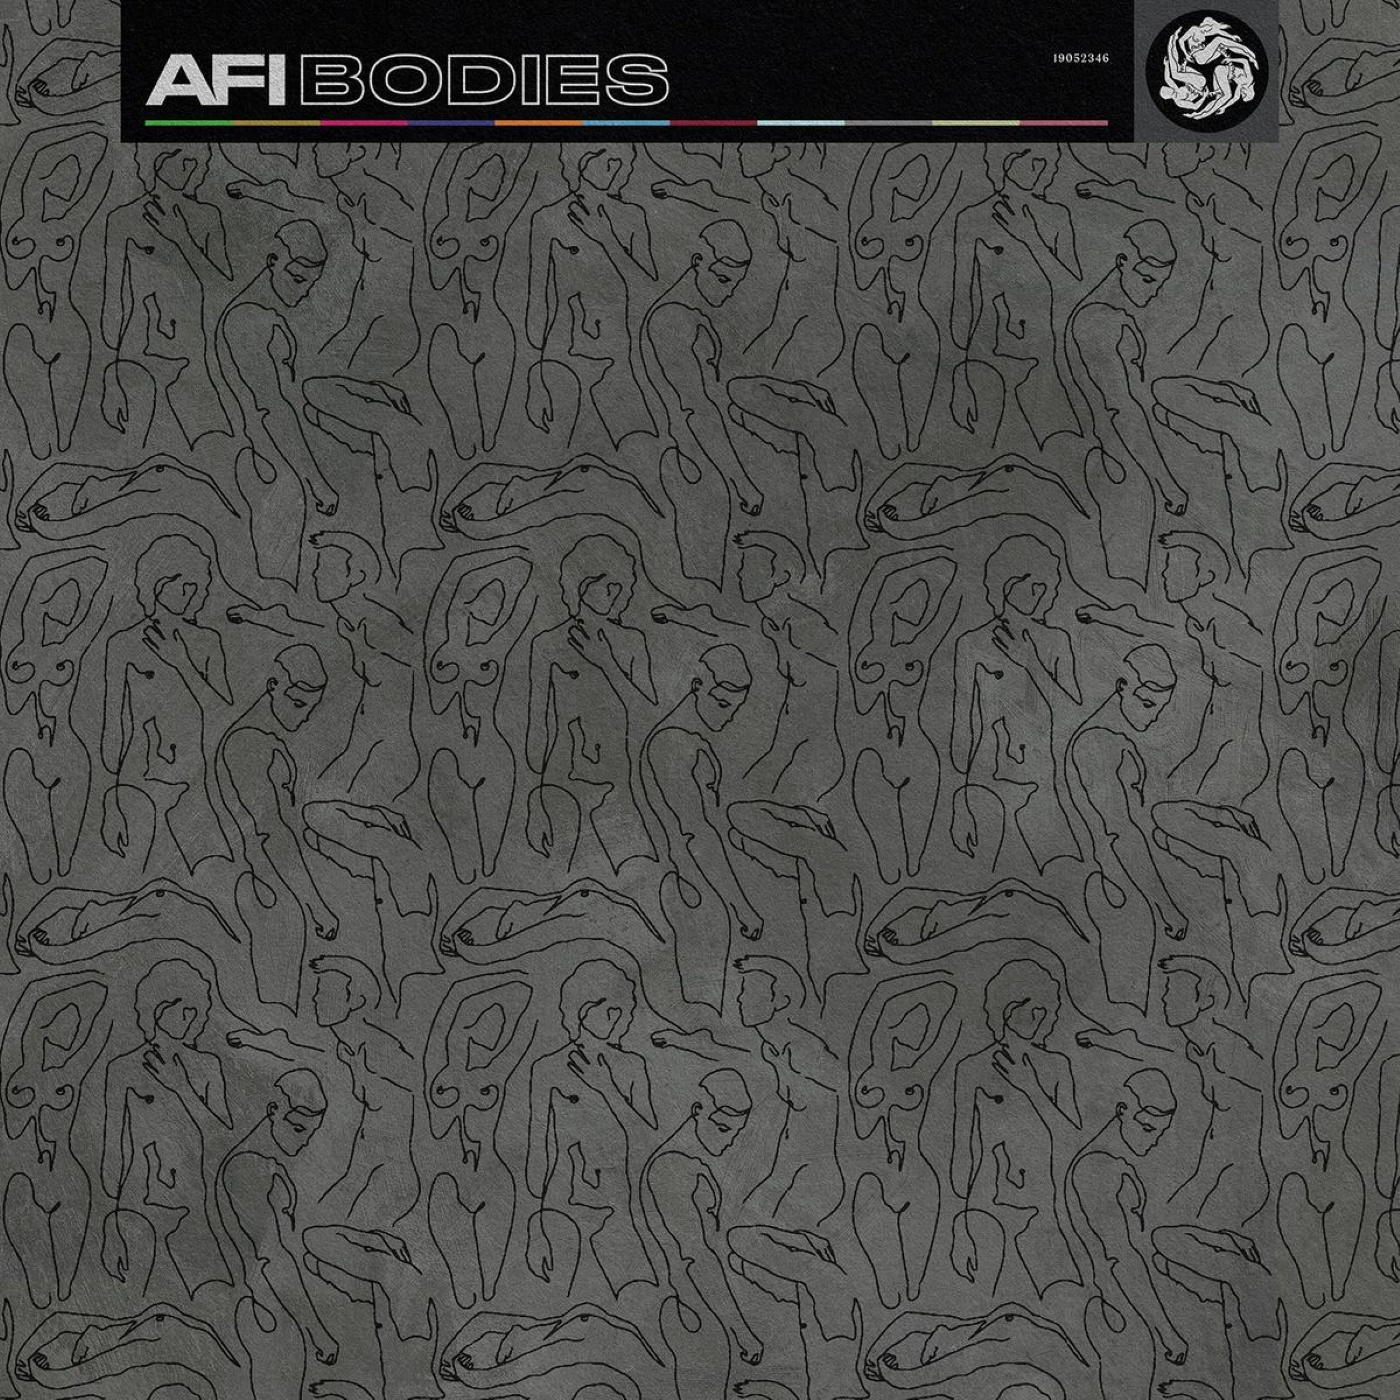 Bodies (Vinyl) - Afi -